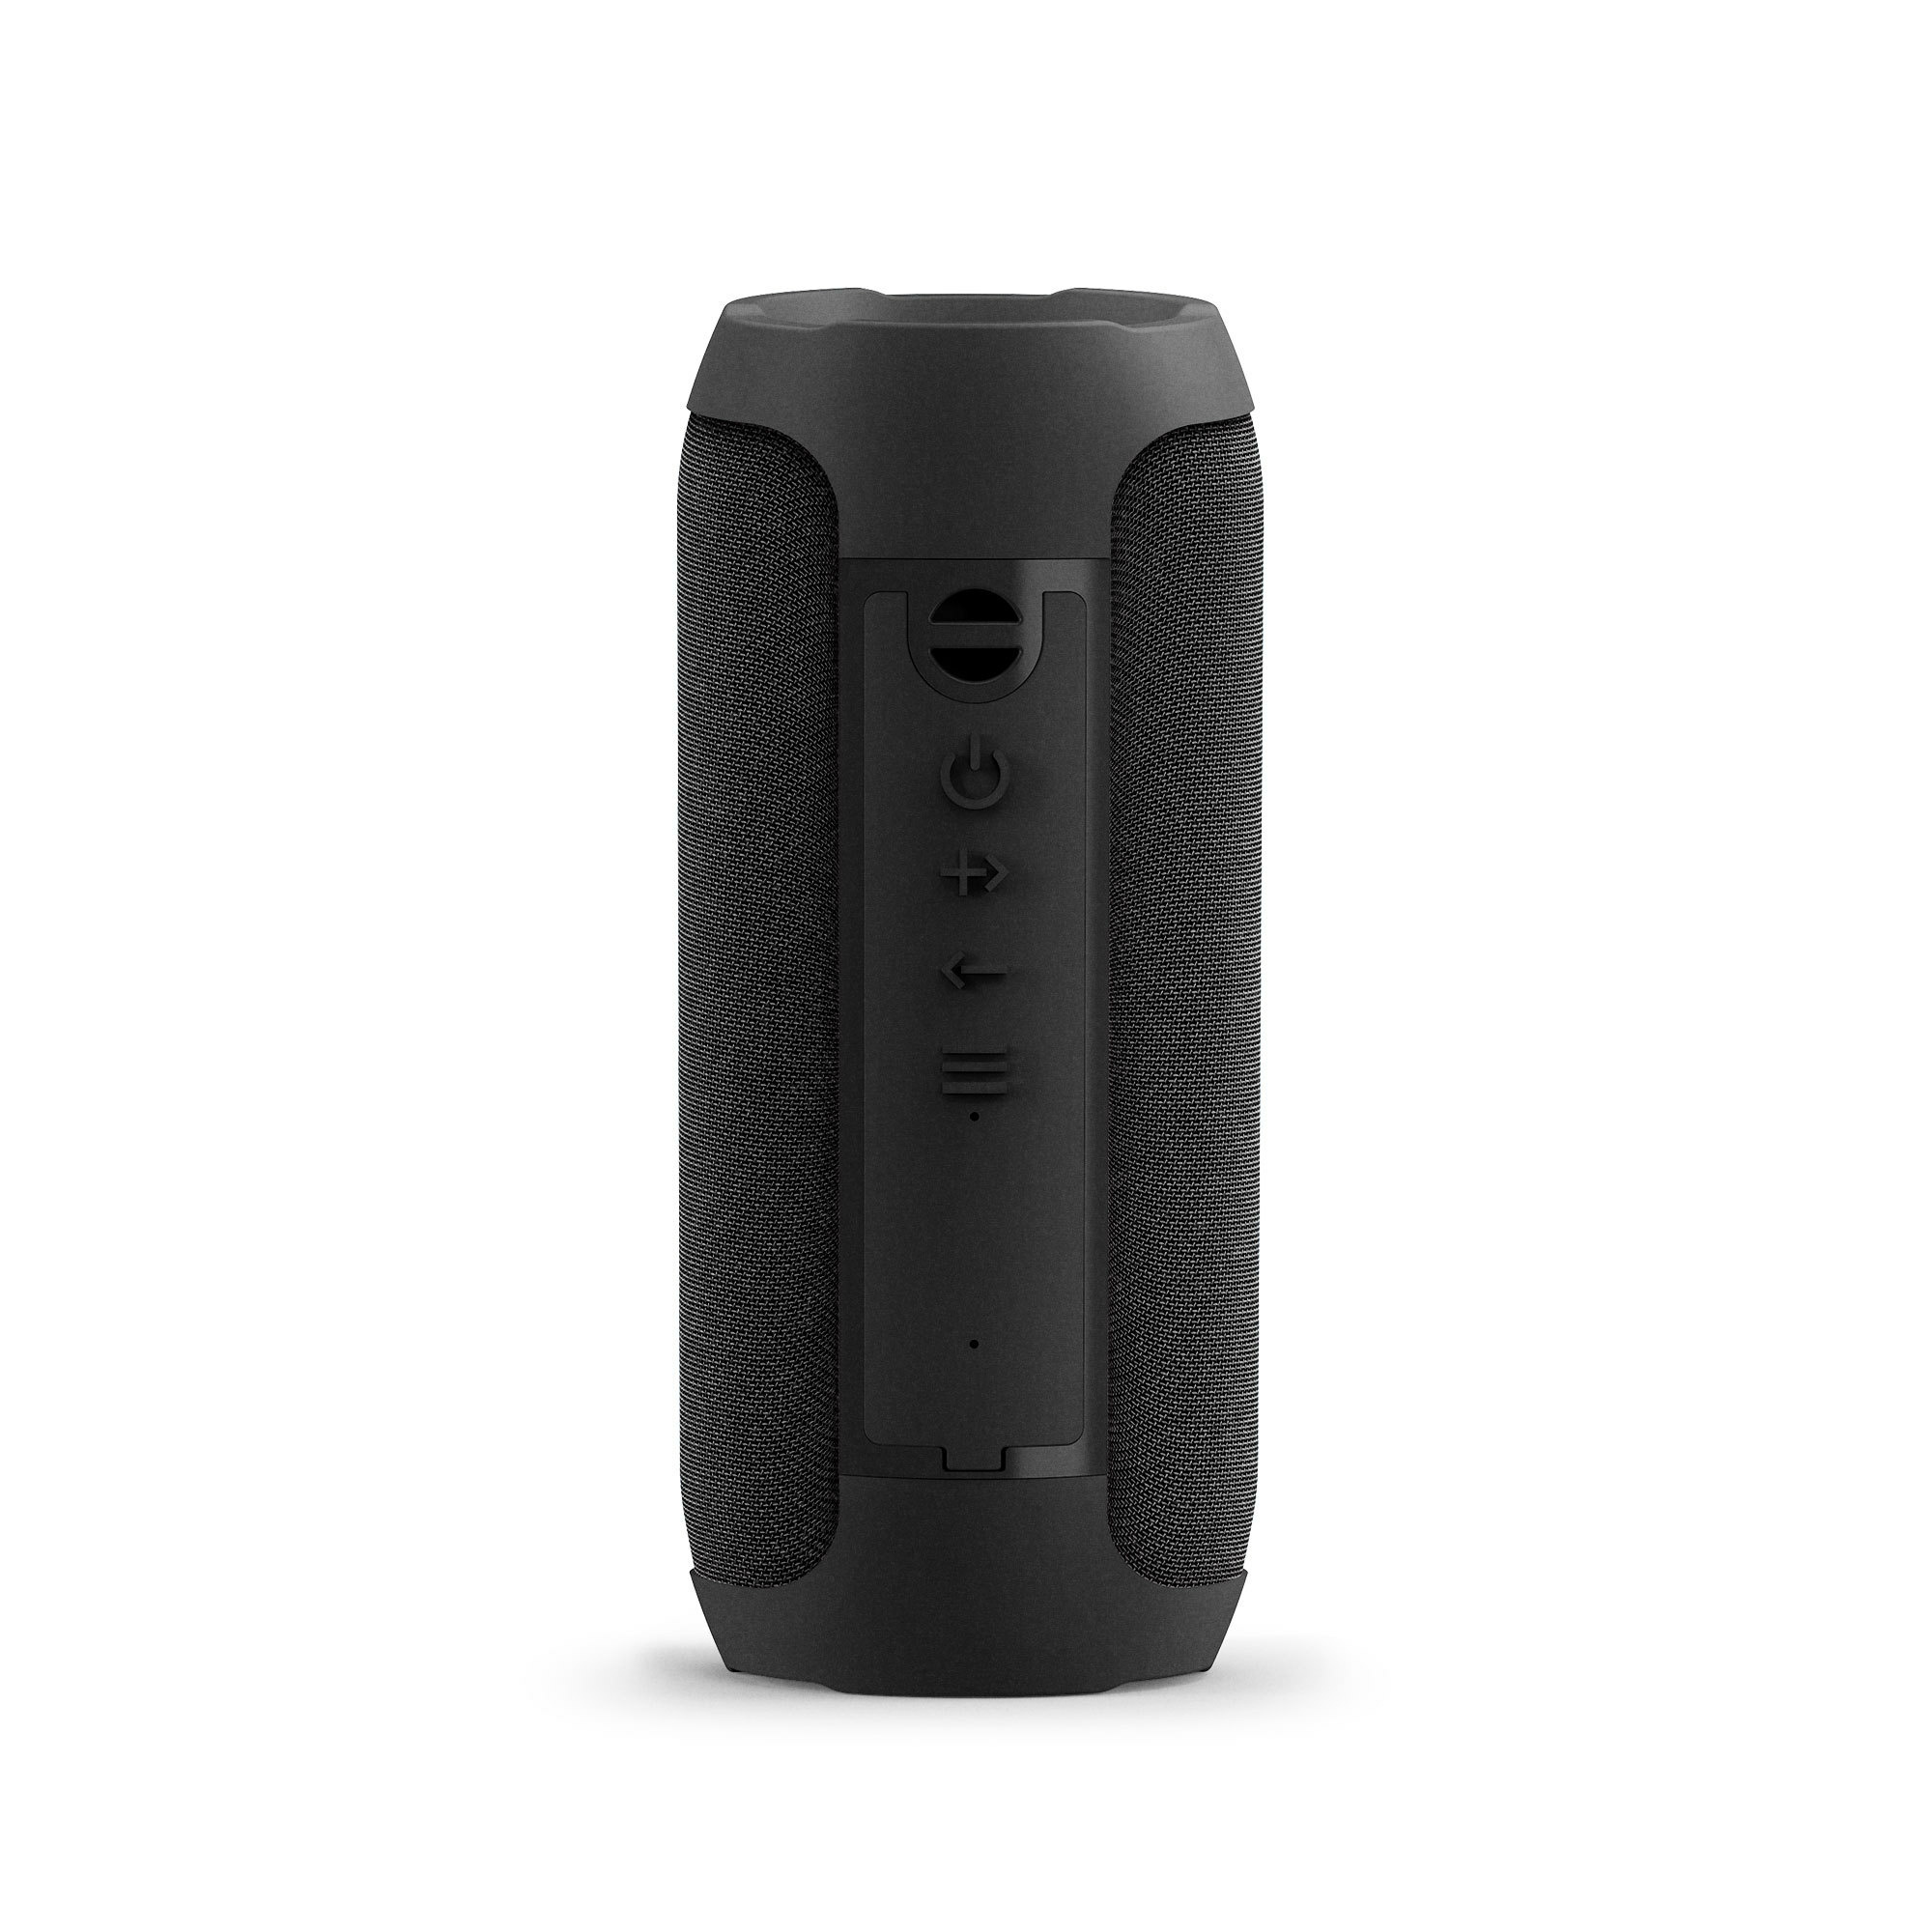 Enceinte Energy Sistem Urban Box 2 - 10W - TWS - Bluetooth 5.0 - Lecteur MP3 USB/MicroSD - Radio FM - Couleur Noir